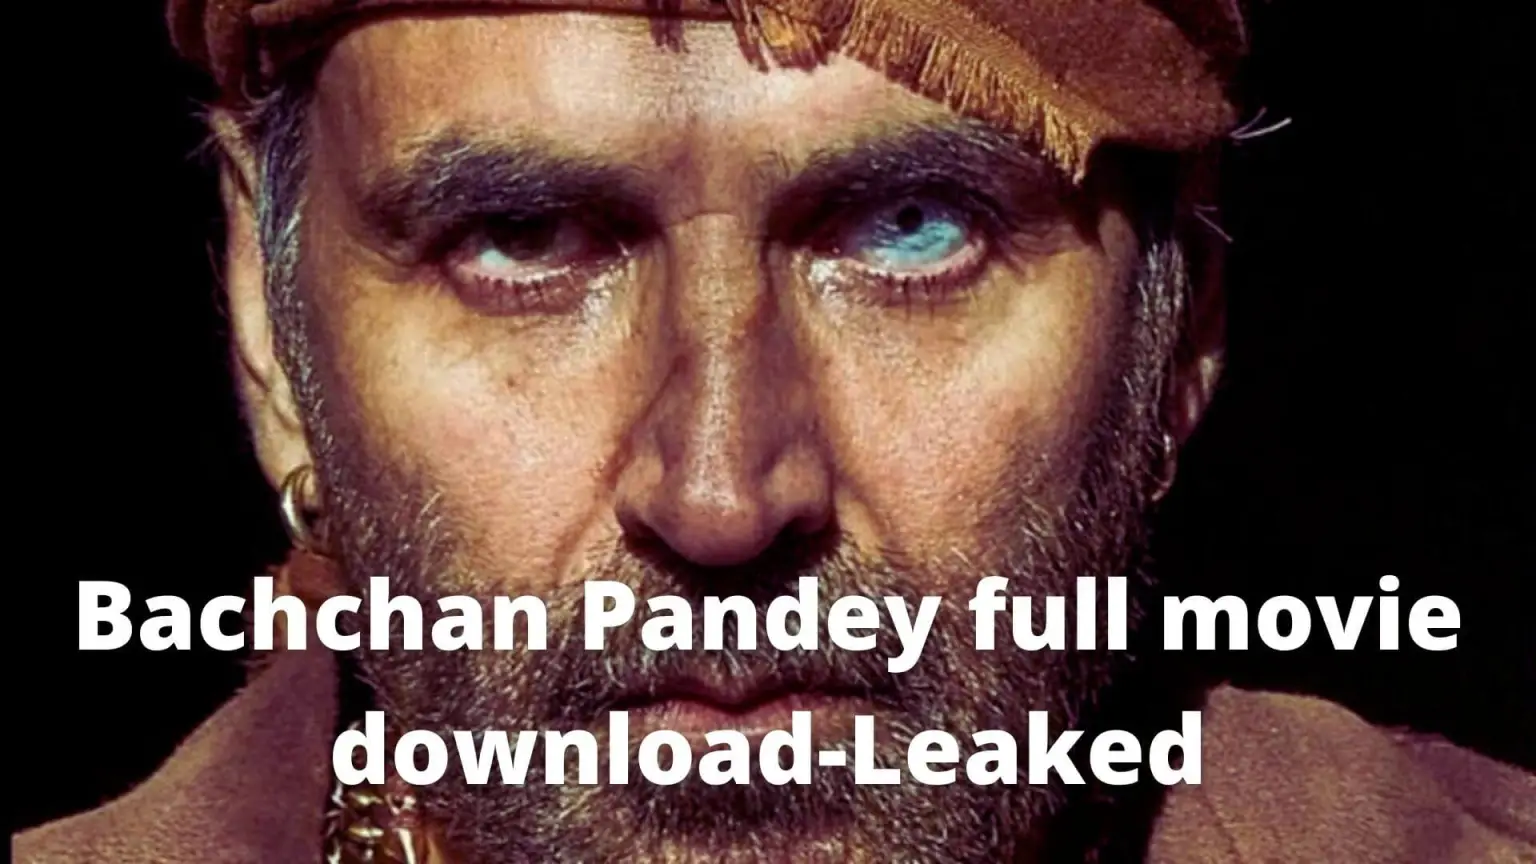 Bachchan Pandey full movie leaked